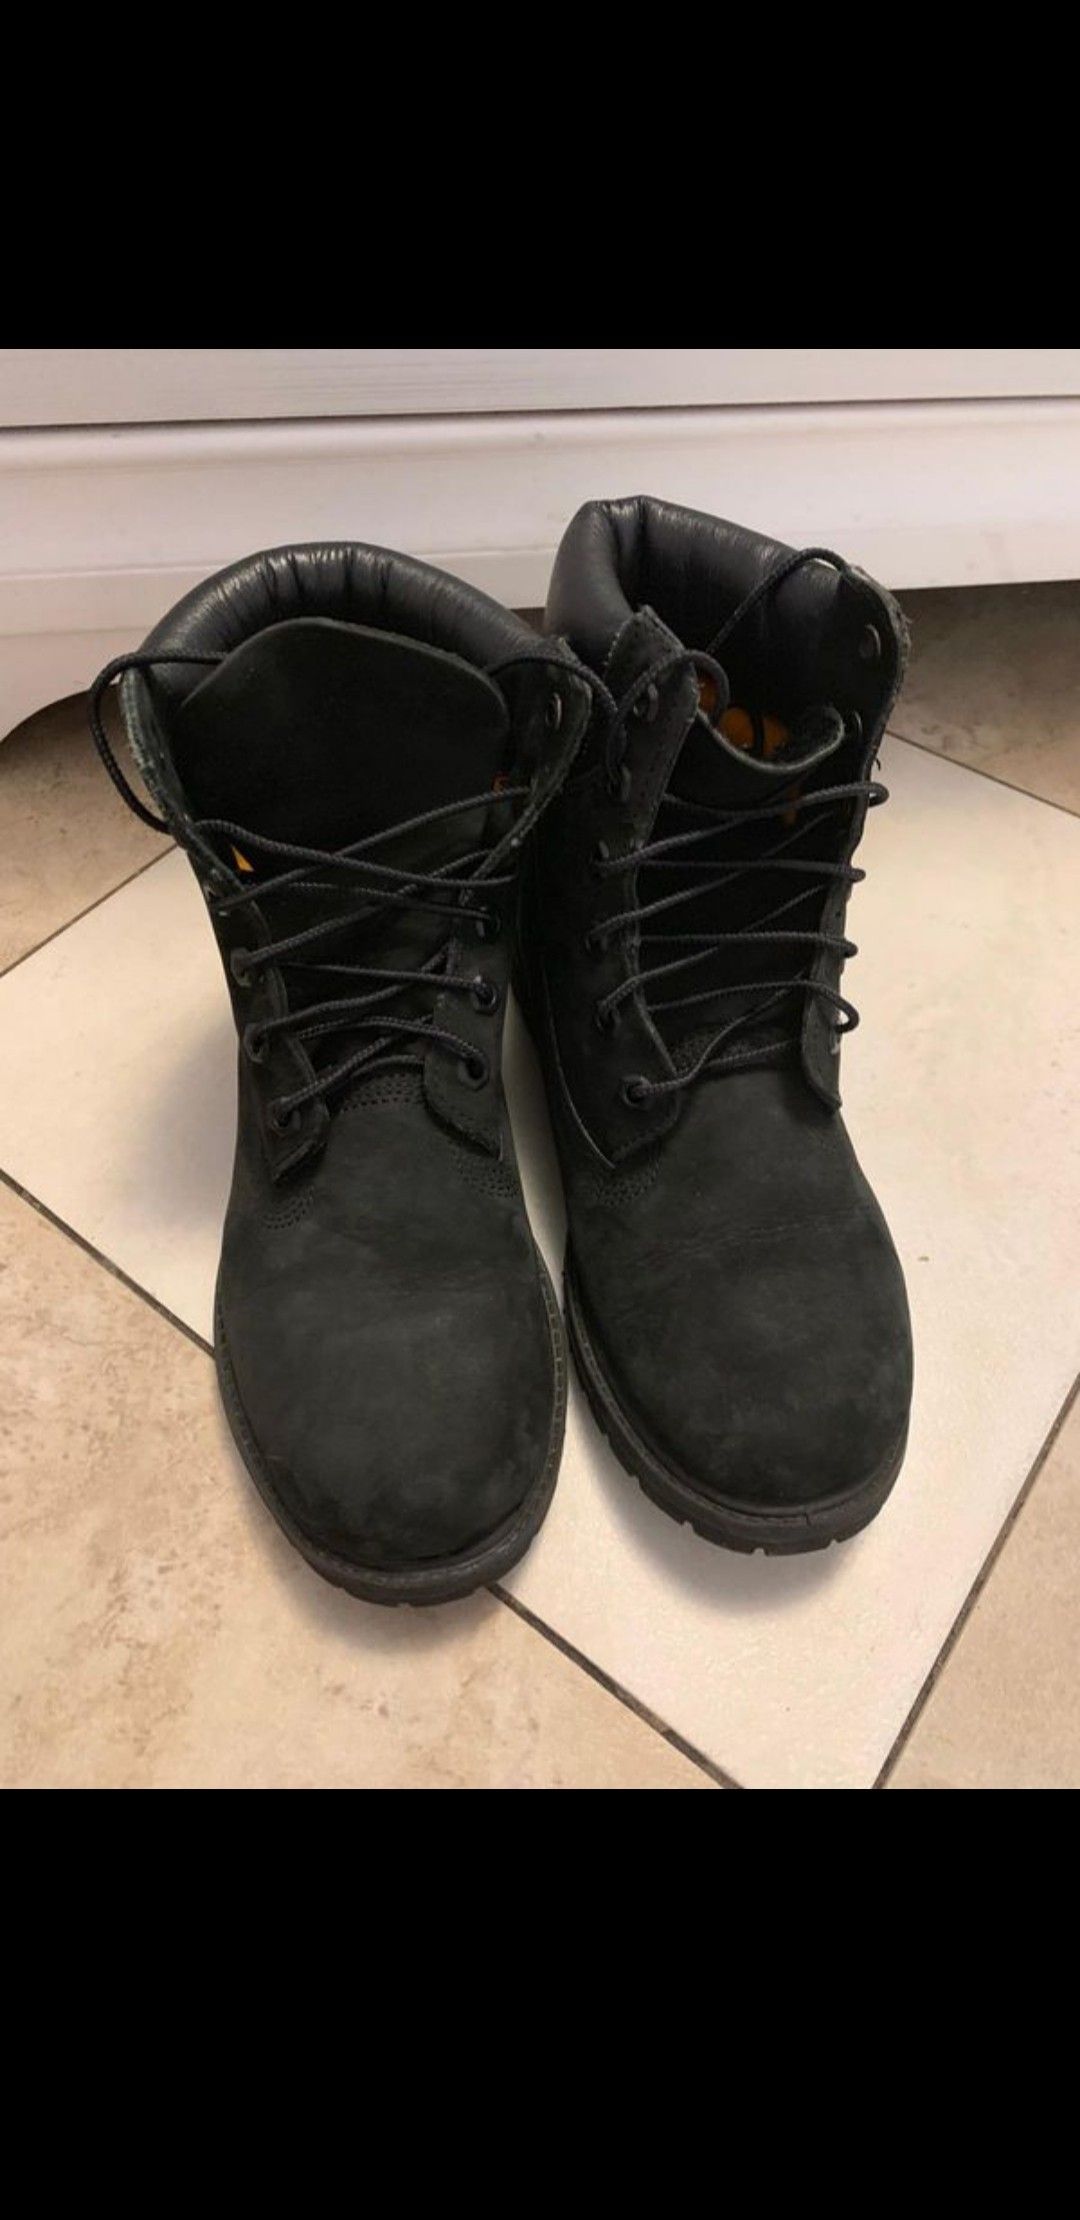 Women's Timberland boots size 8